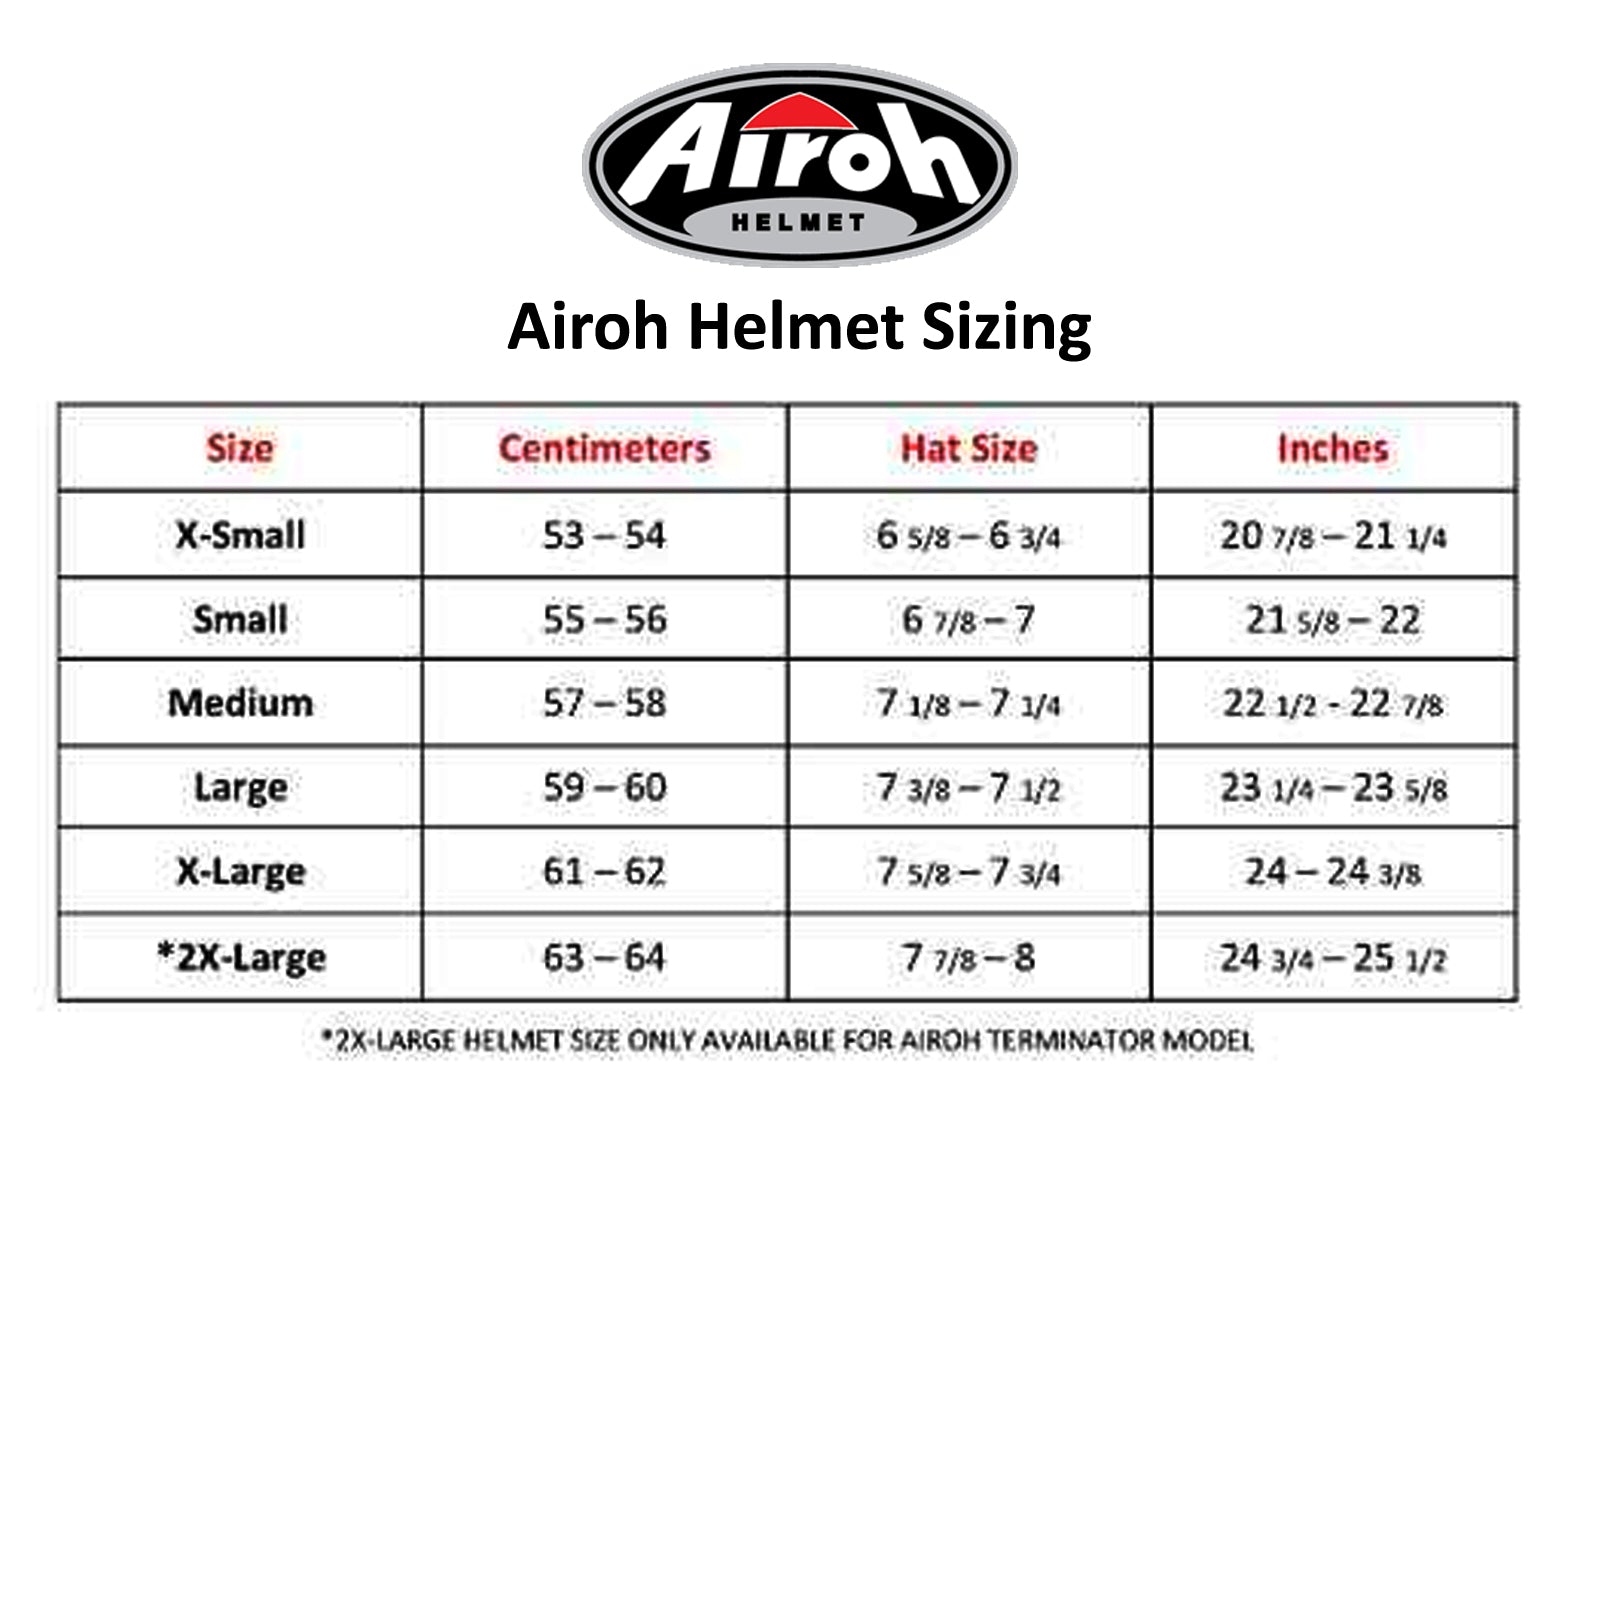 Airoh Motorbike Helmet Valor Matt Black